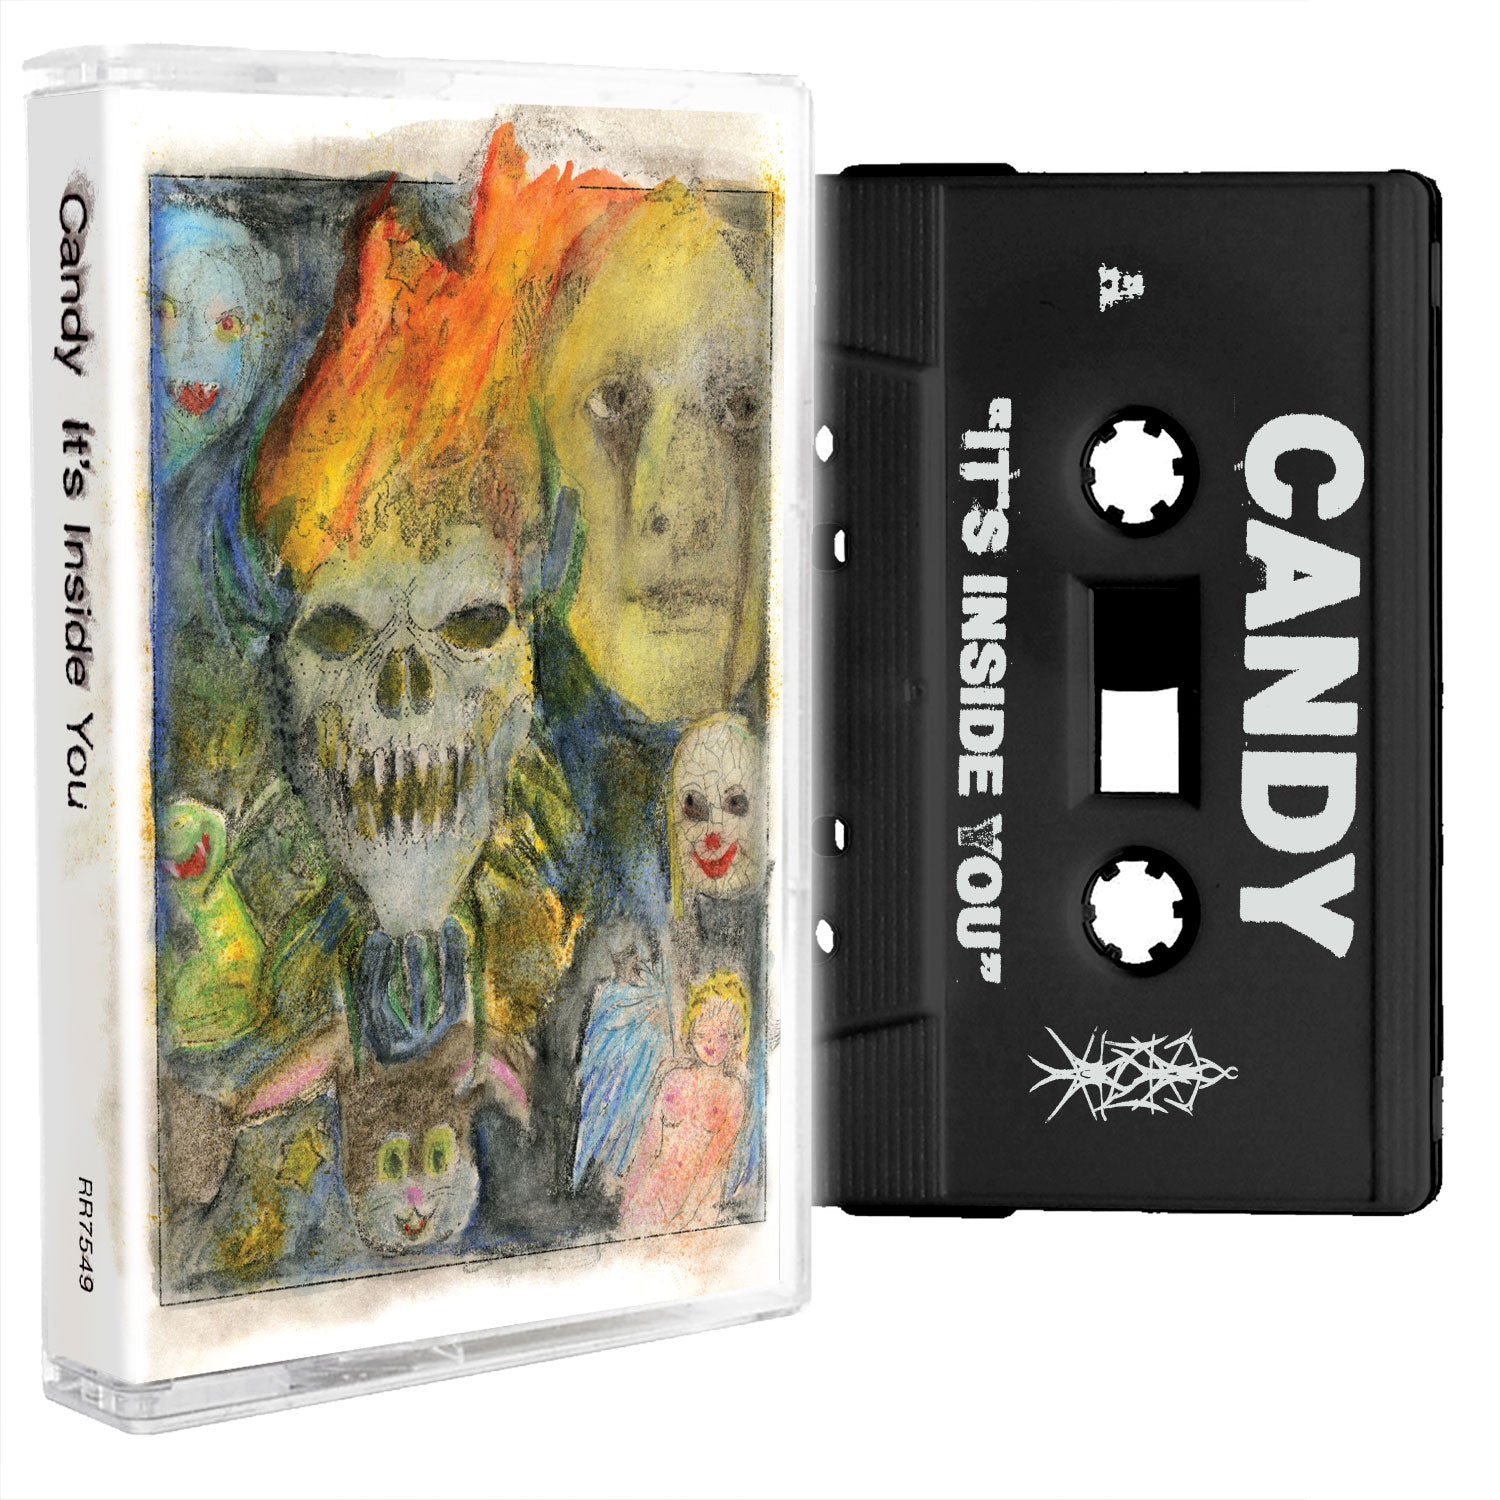 Candy "It's Inside You" Cassette